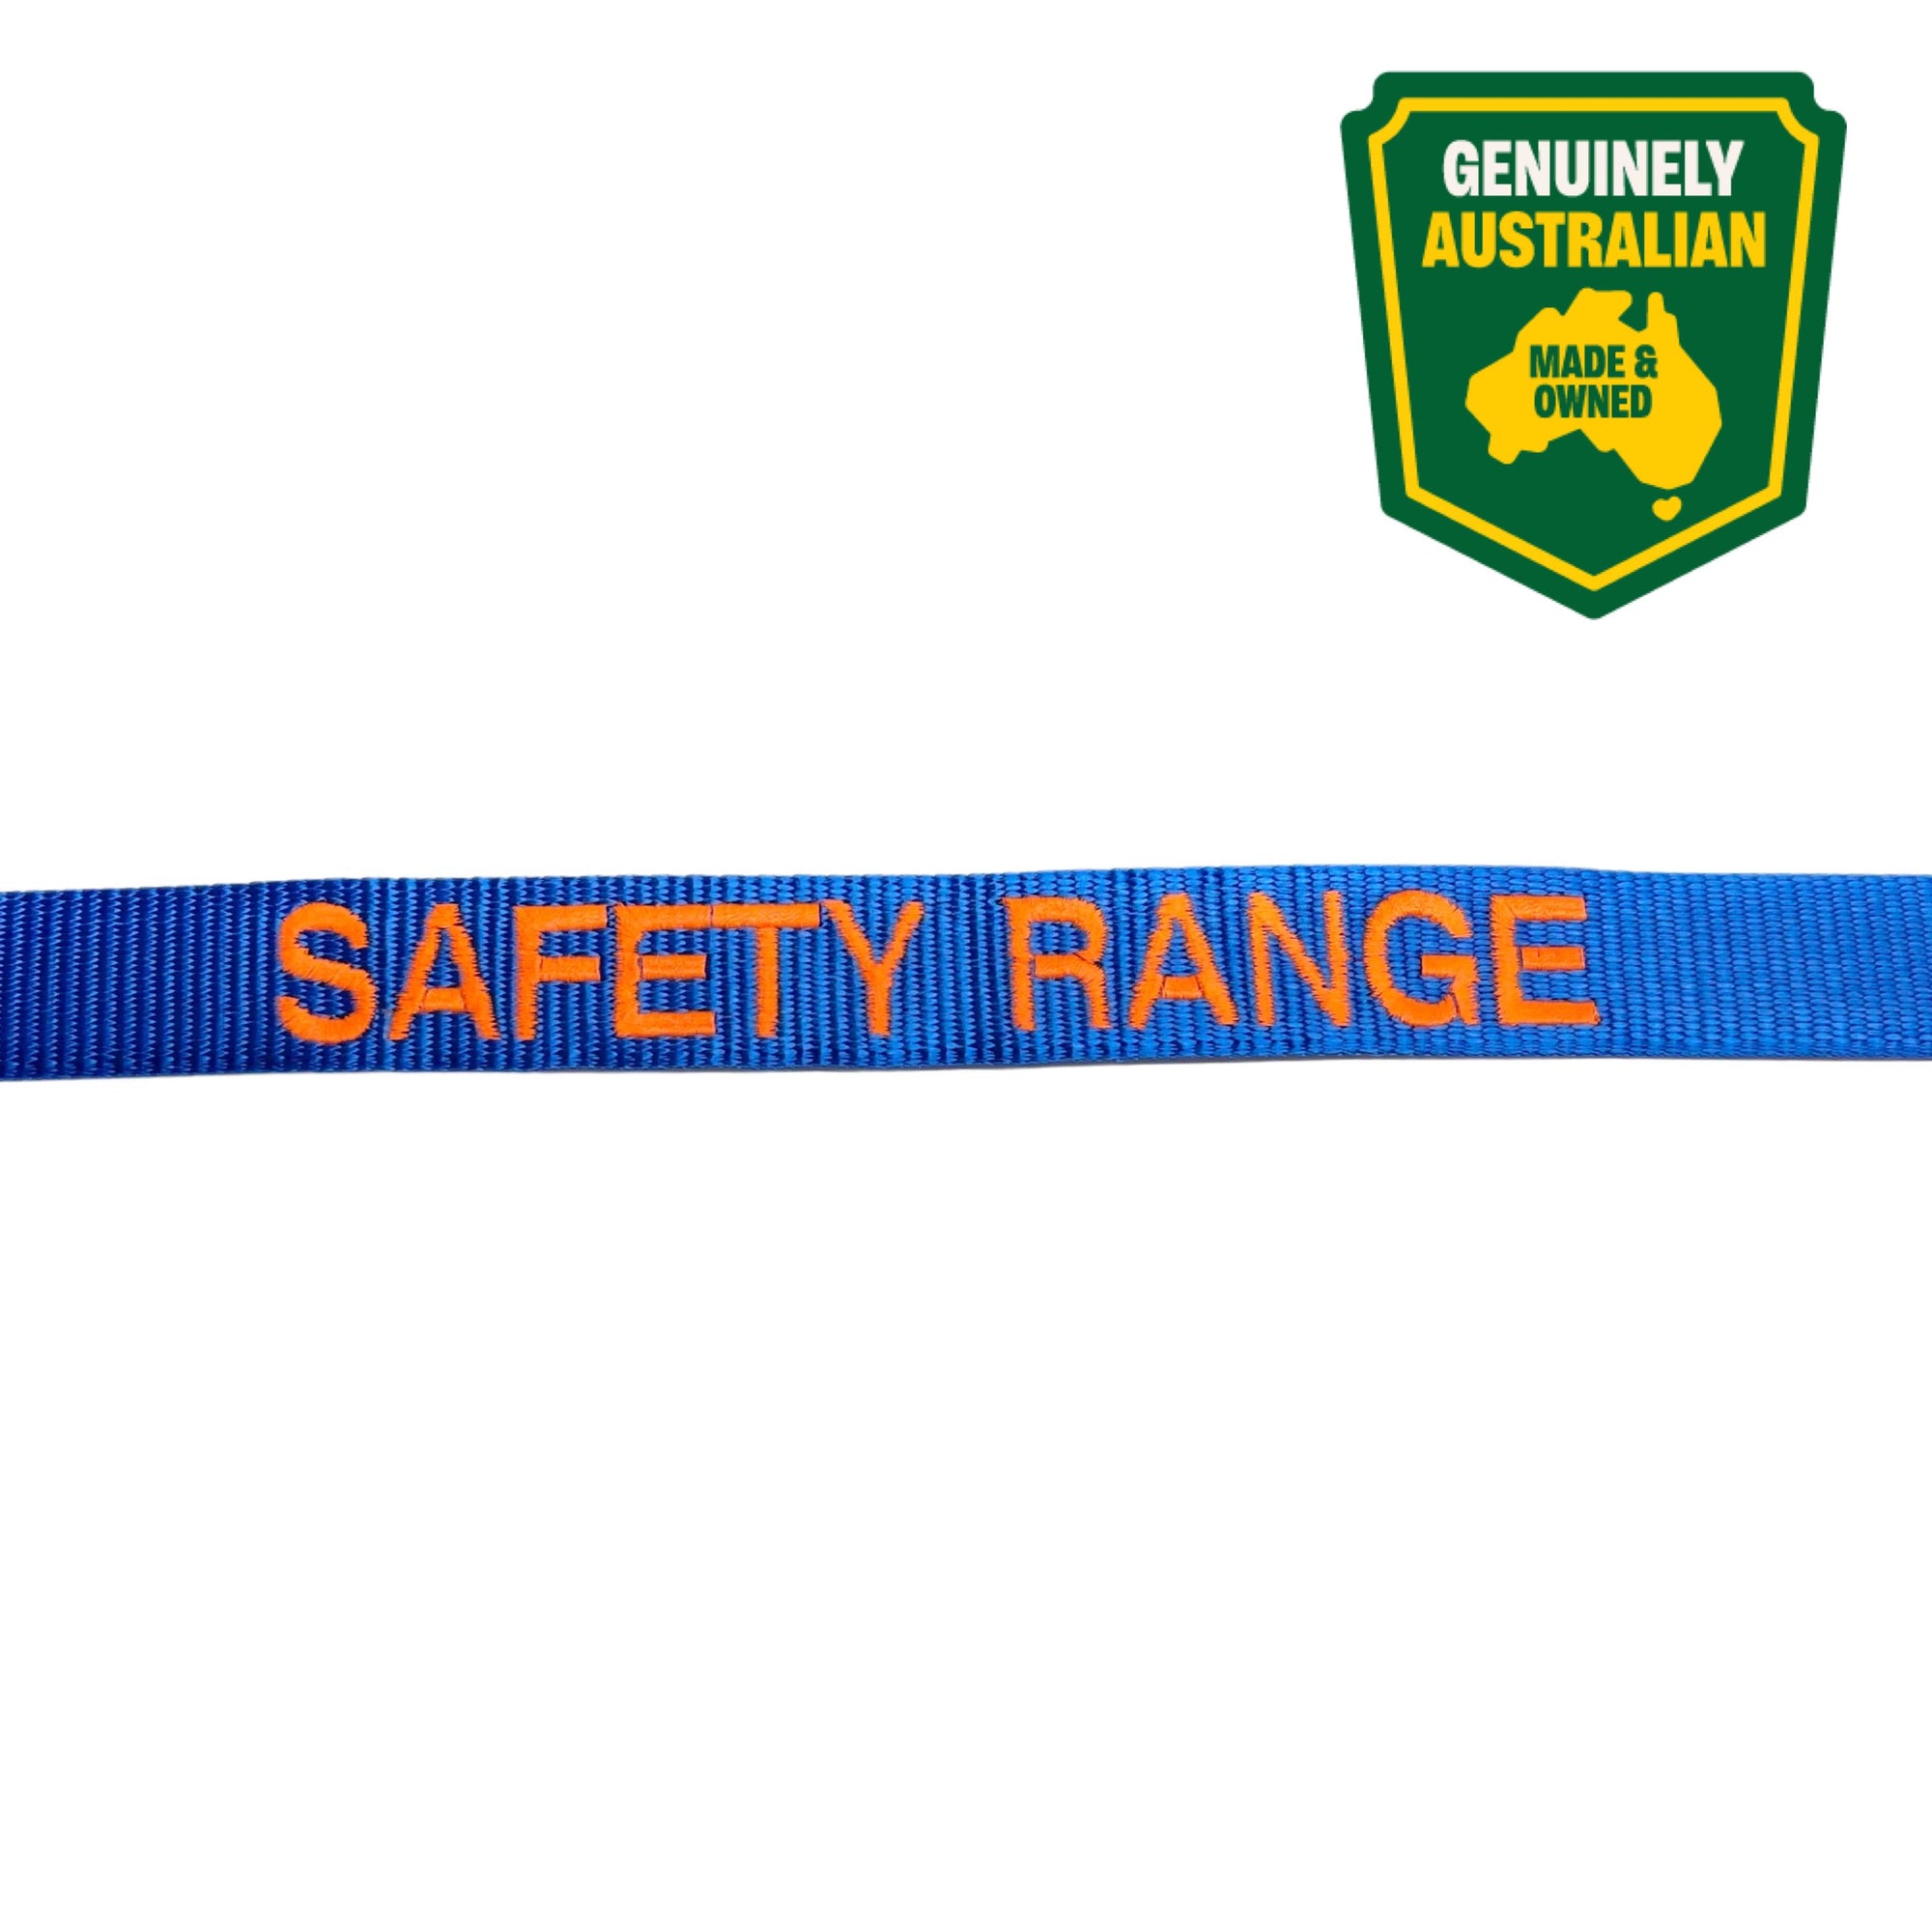 Safety Range